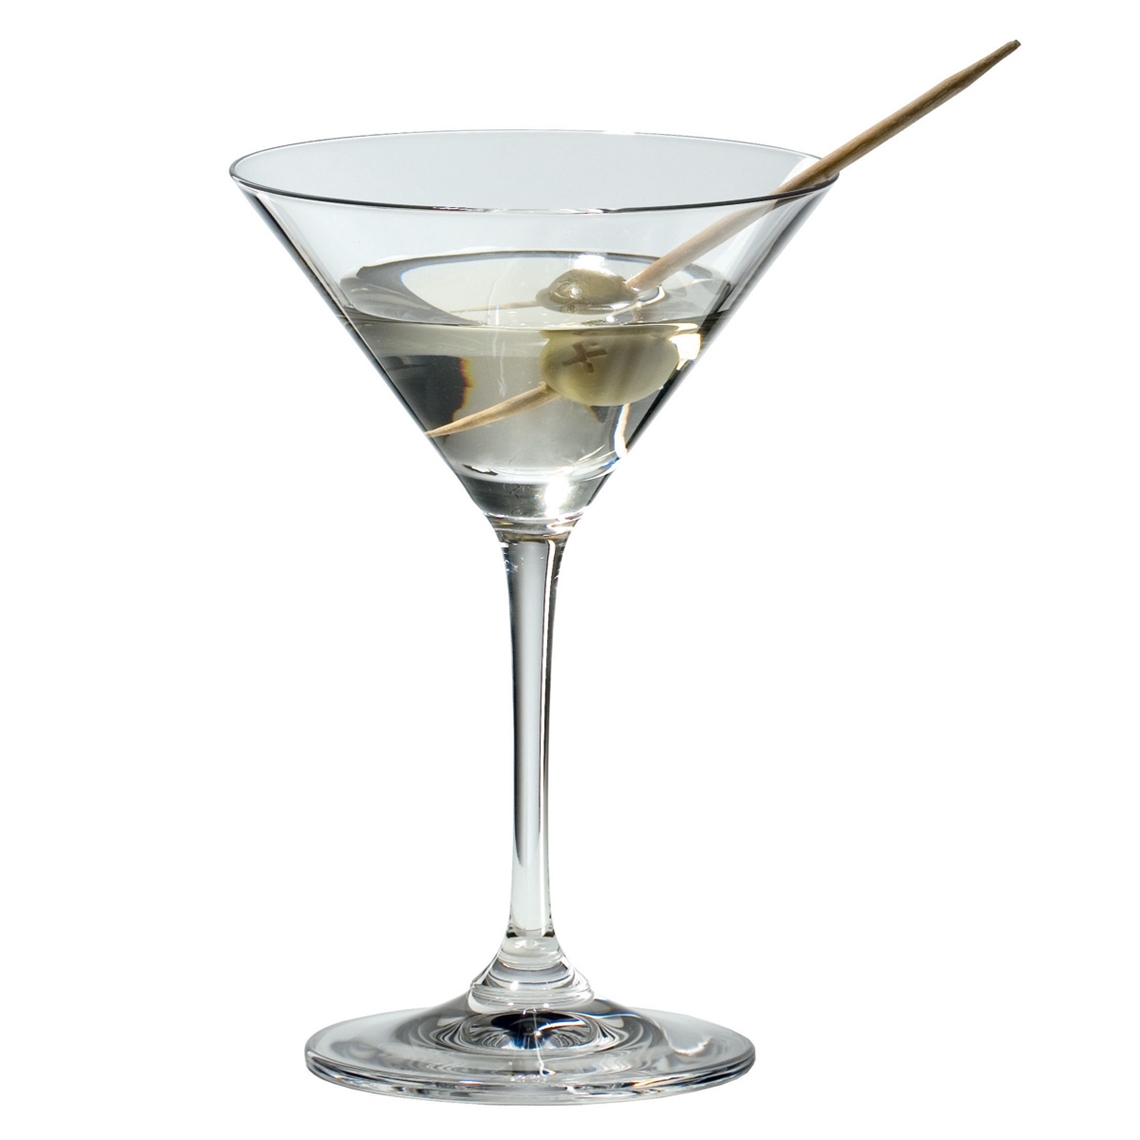 View more rioja wine glasses from our Martini Glasses range